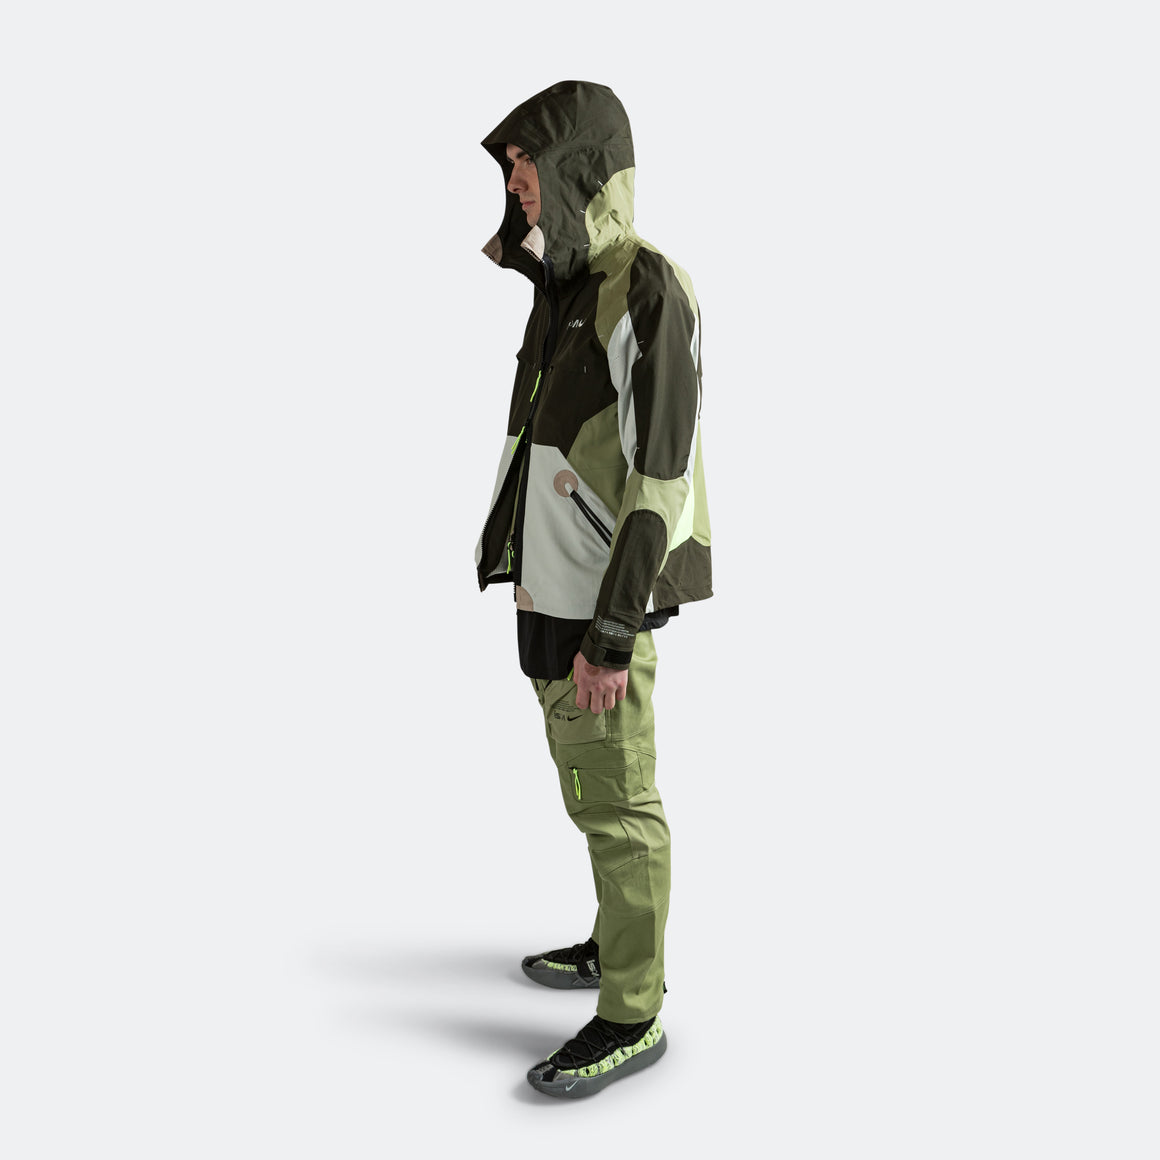 Nike - ISPA Jacket - Sequoia/Alligator - UP THERE